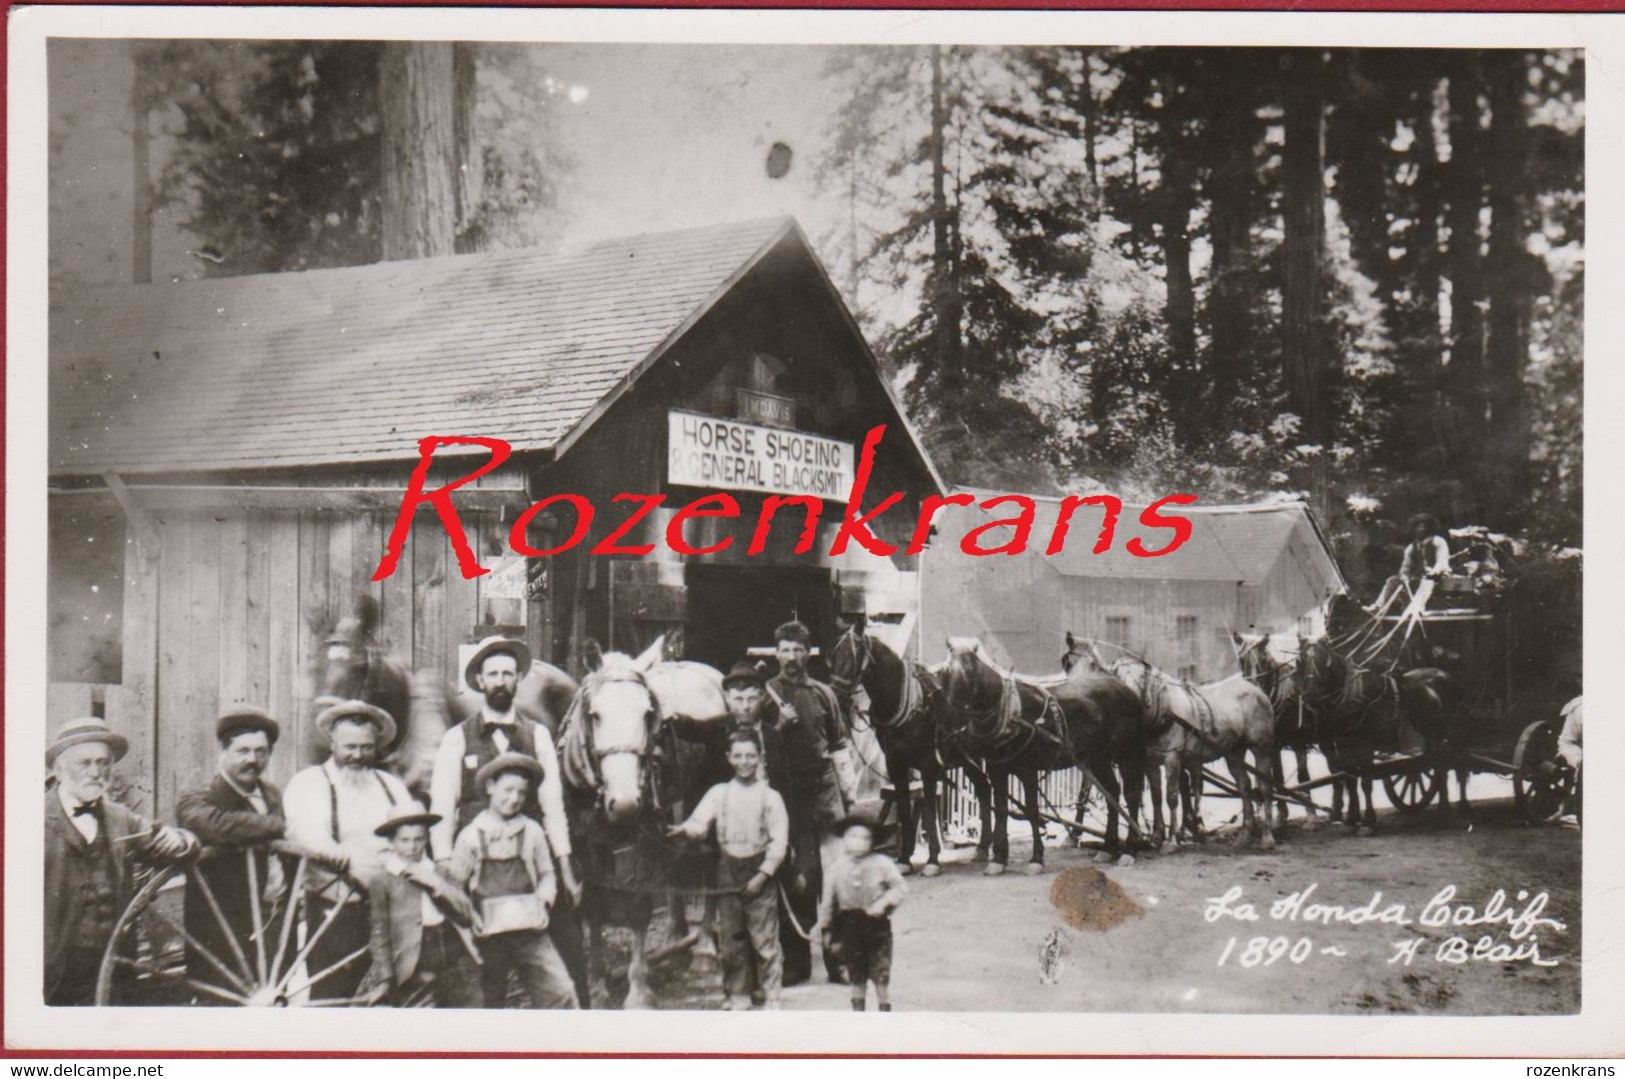 La Honda California San Mateo County USA Horse Shoeing & General Blacksmit 1890 - Ex Redwood City 1956 - San Francisco